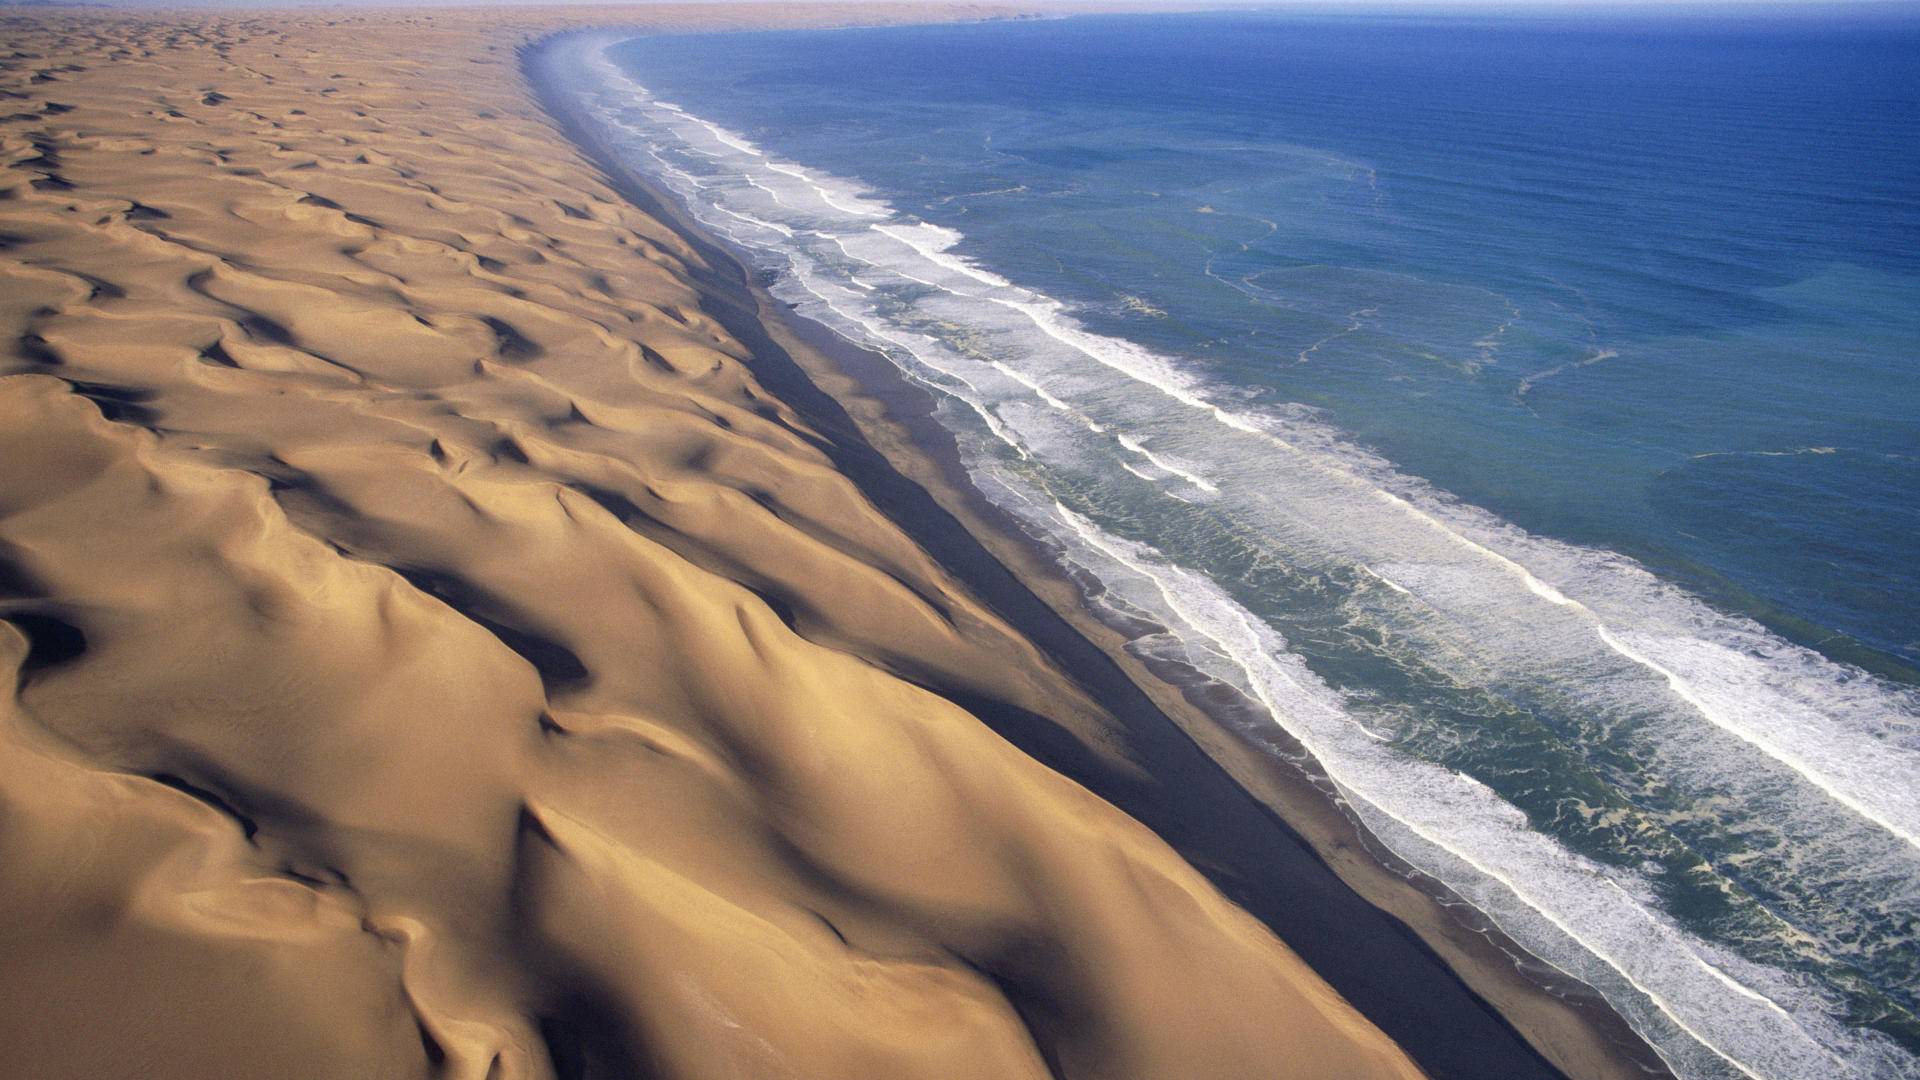 Namib Desert: meeting with the ocean